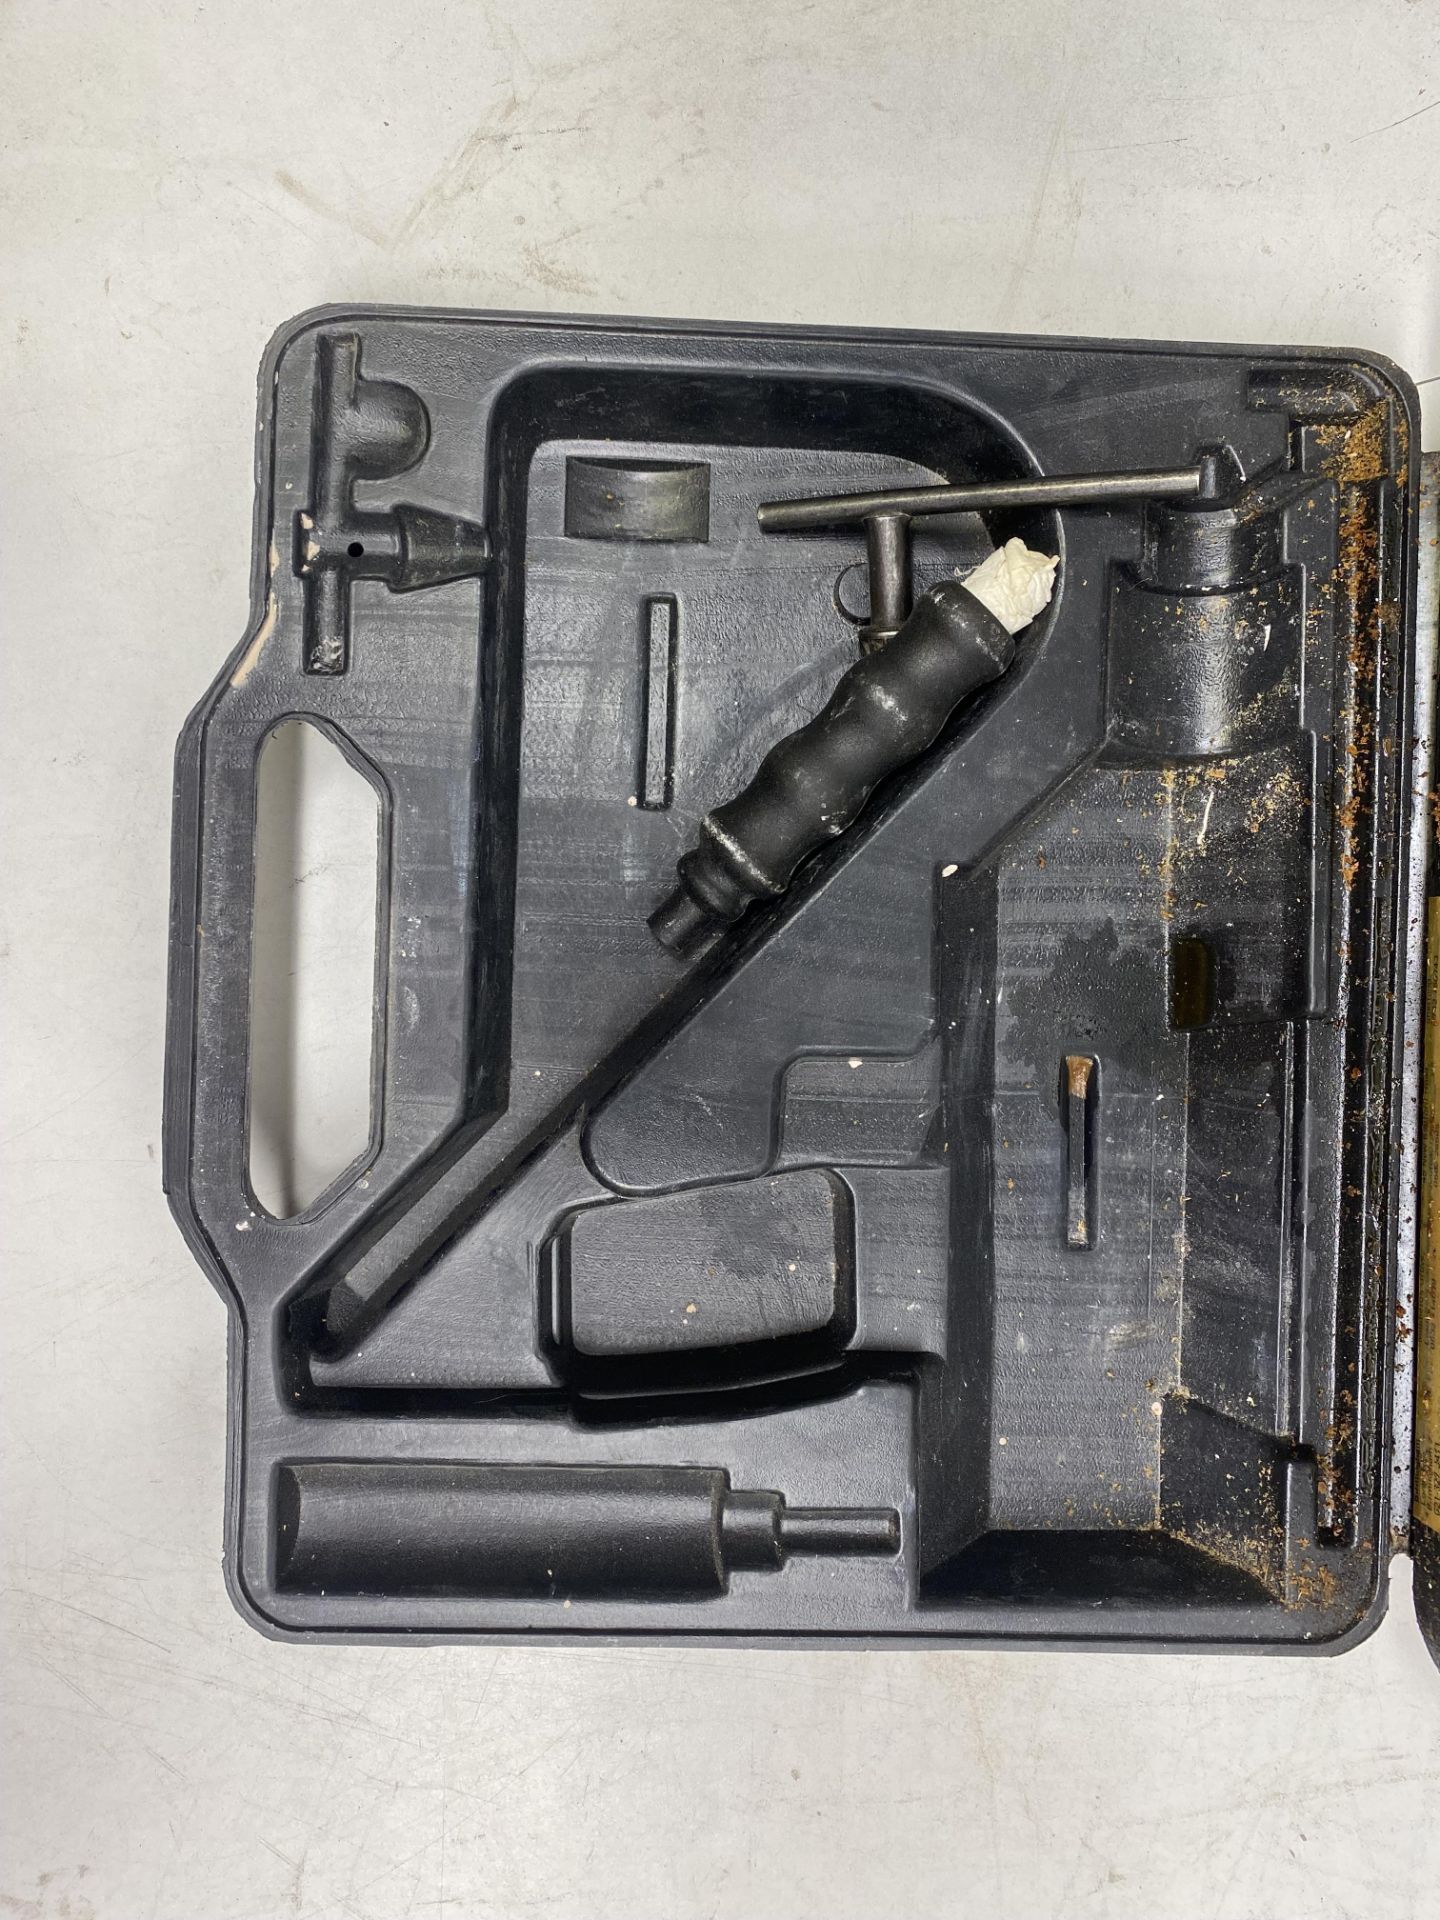 Black & Decker S3A28 13mm Hammer Drill - Image 7 of 7